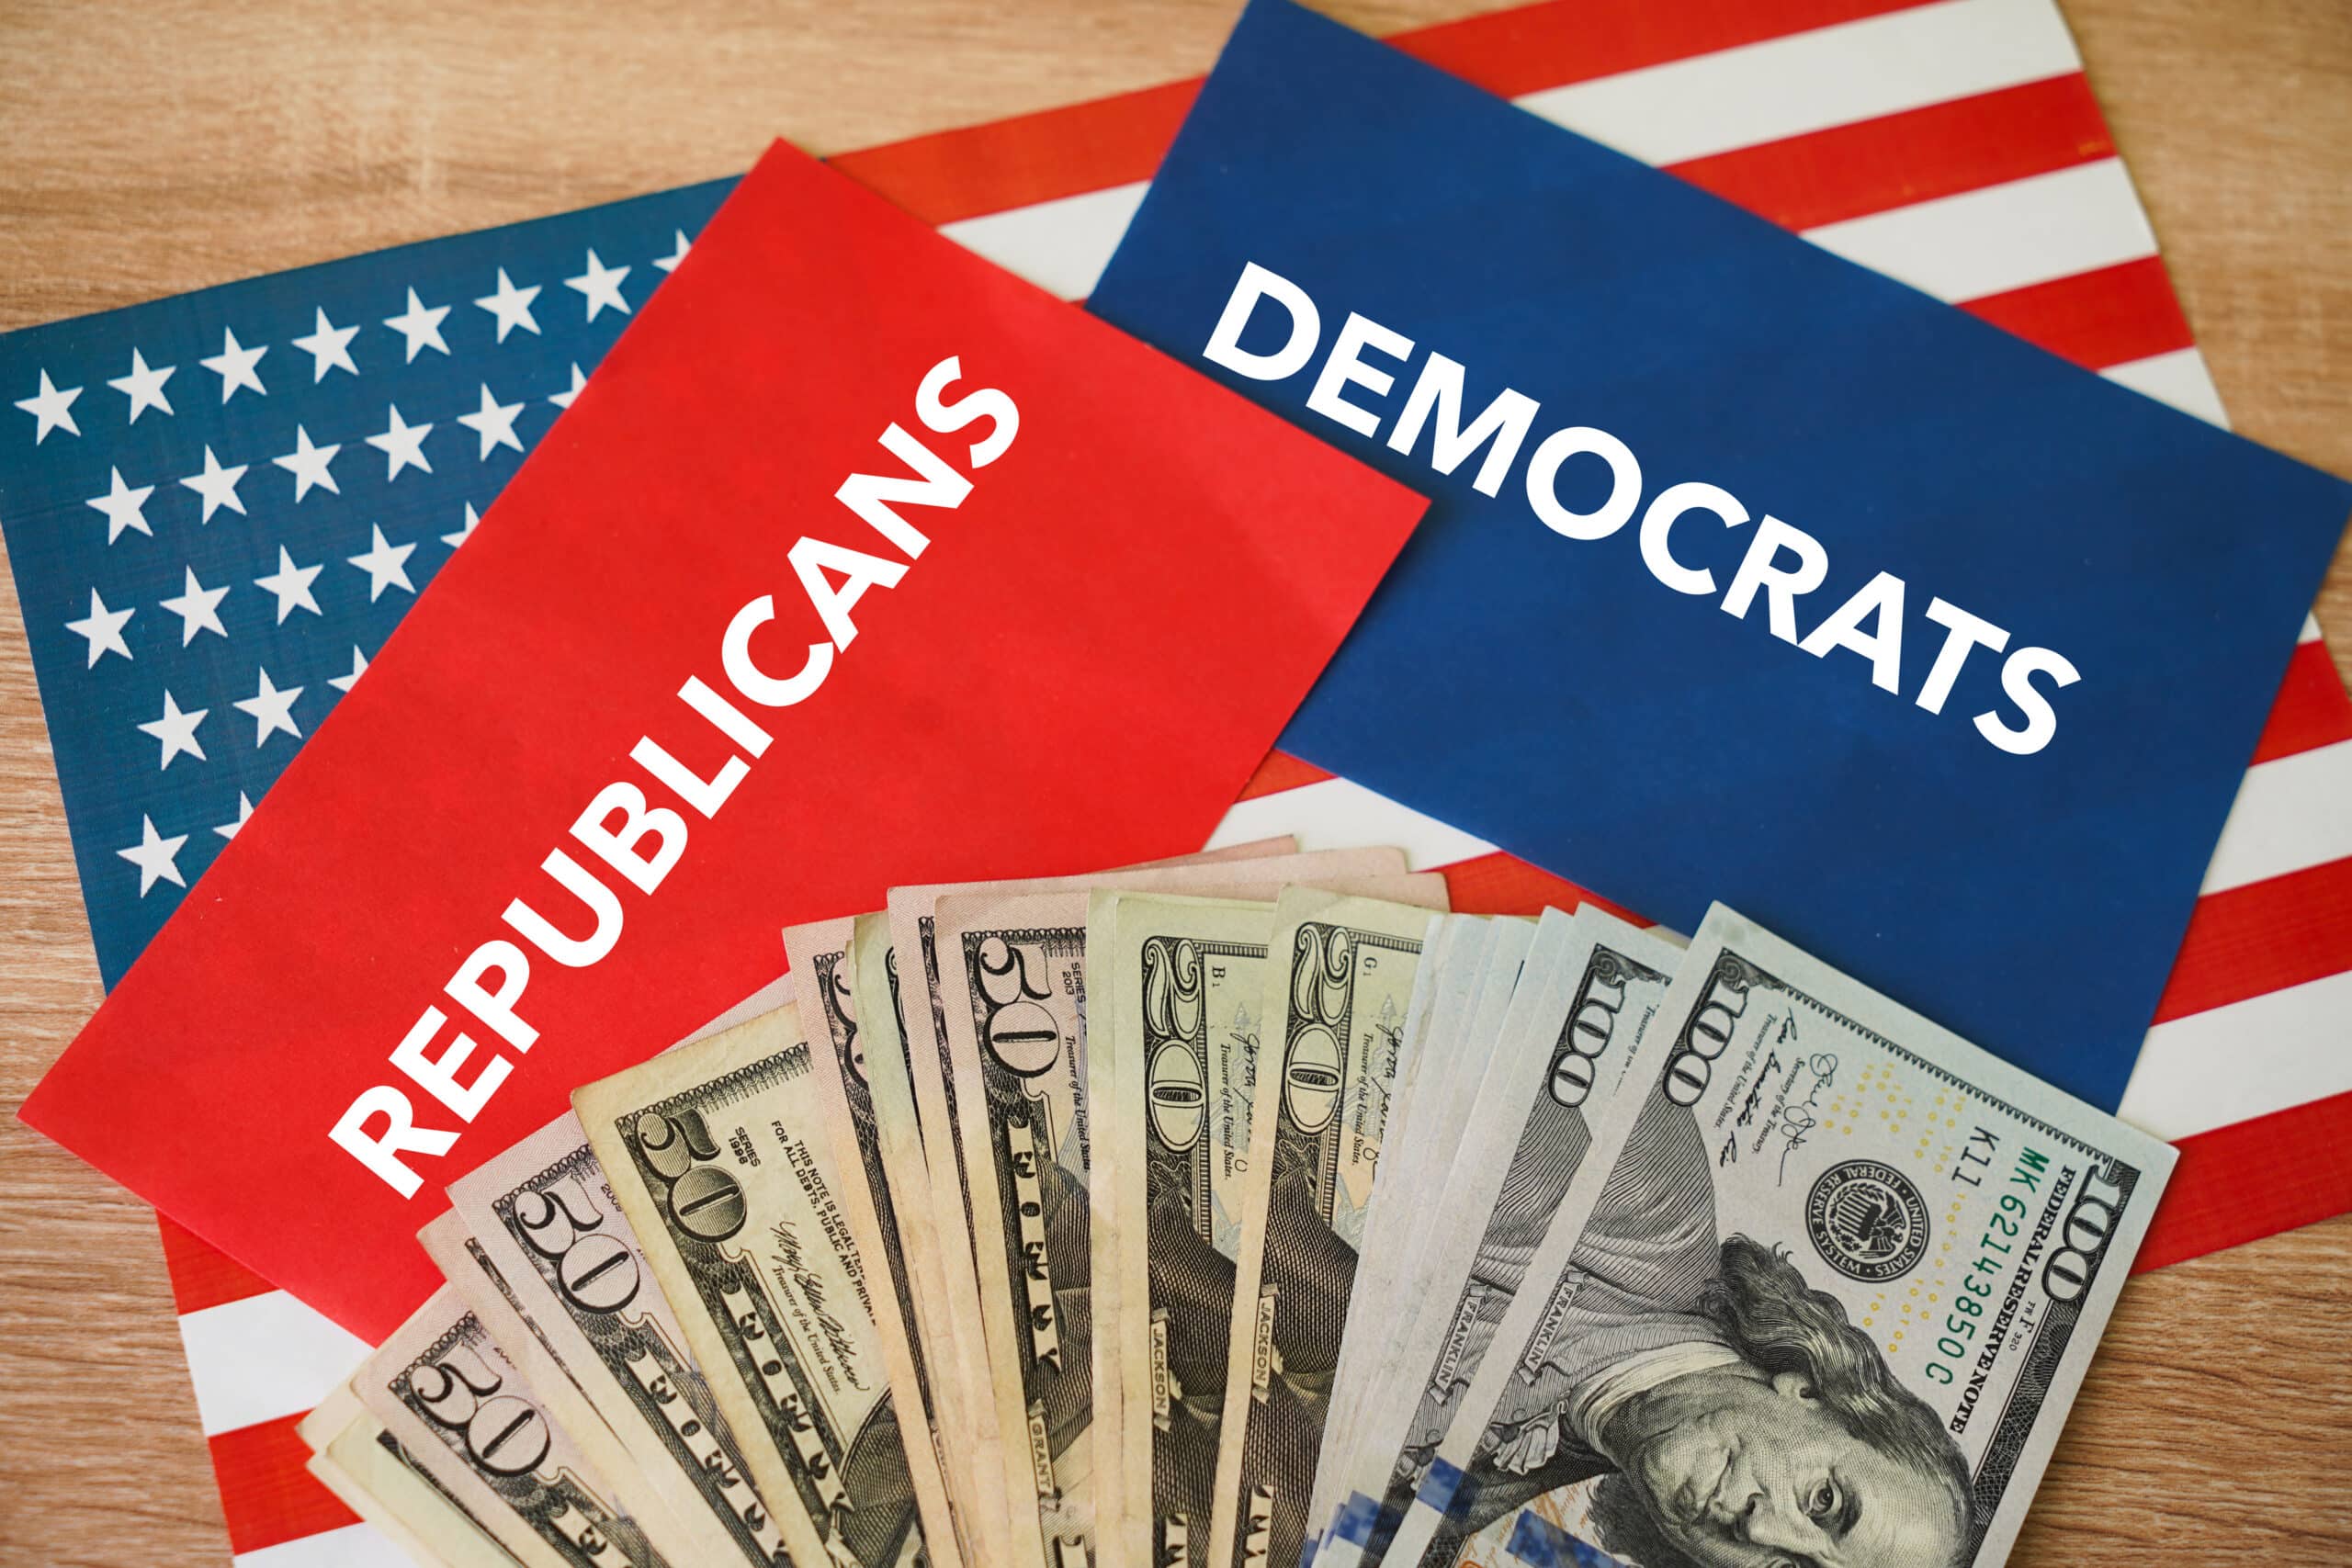 US Flag, money and democratic/republic cards